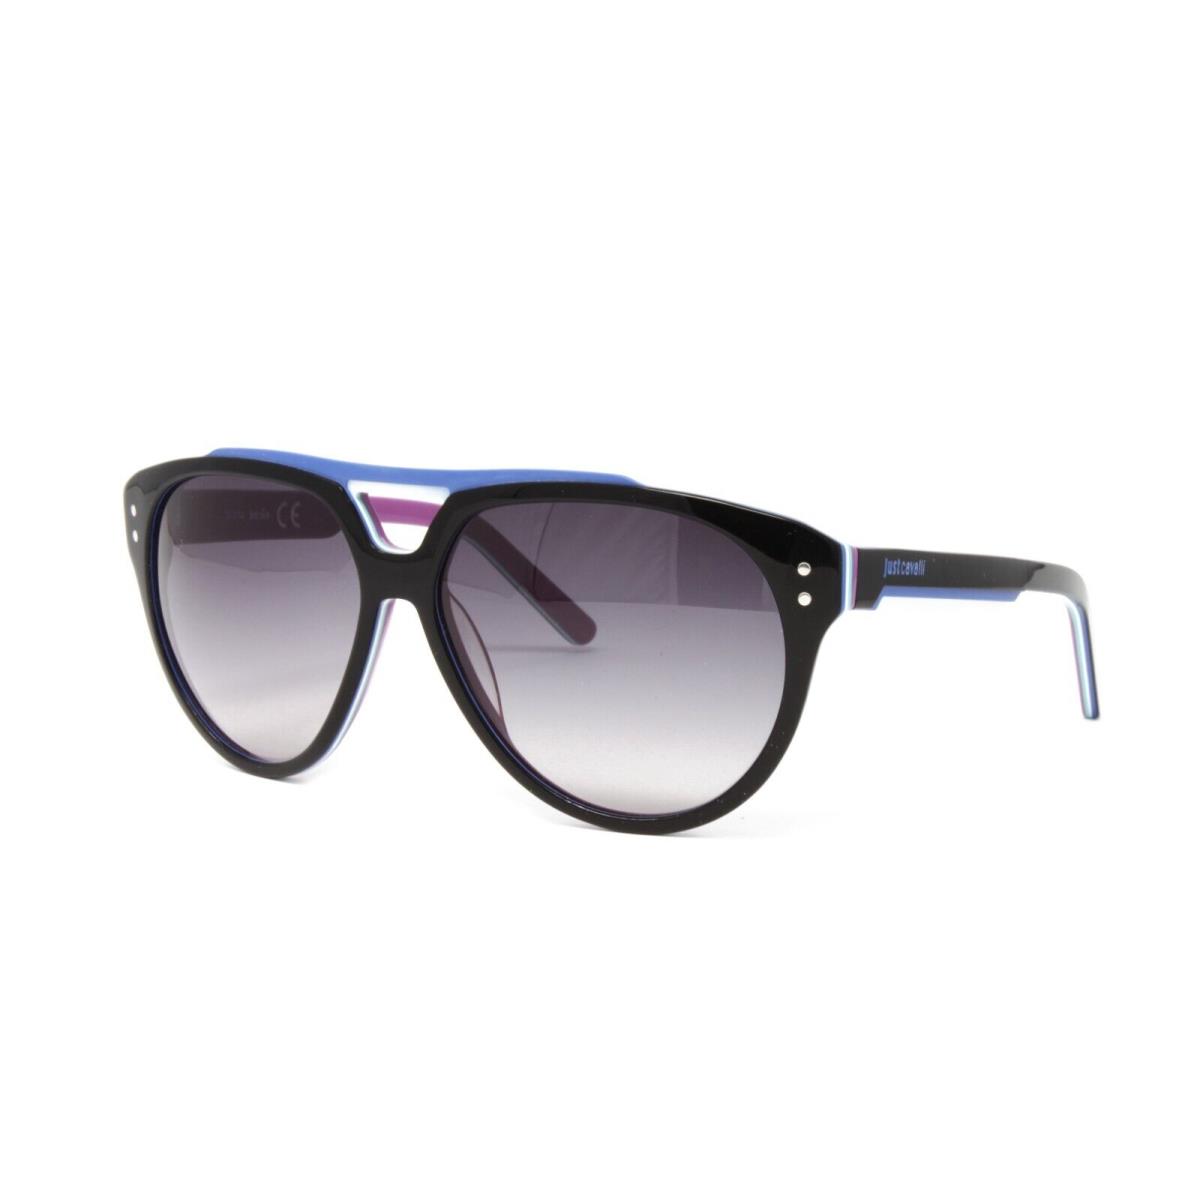 Just Cavalli Sunglasses Unisex Pilot JC506S 05W Black/purple/blue 58mm